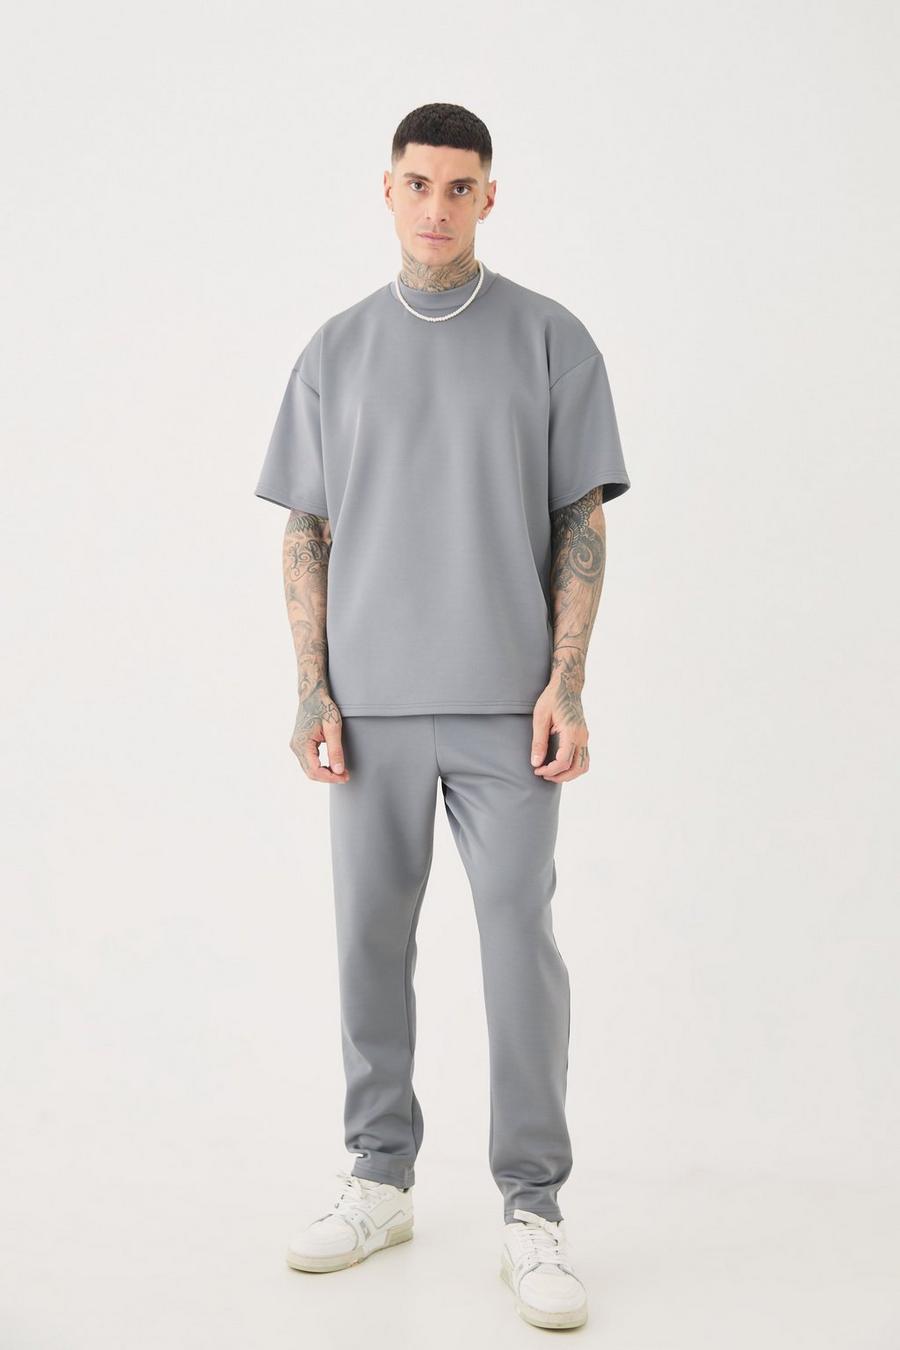 Tall - Ensemble oversize avec t-shirt et jogging, Charcoal